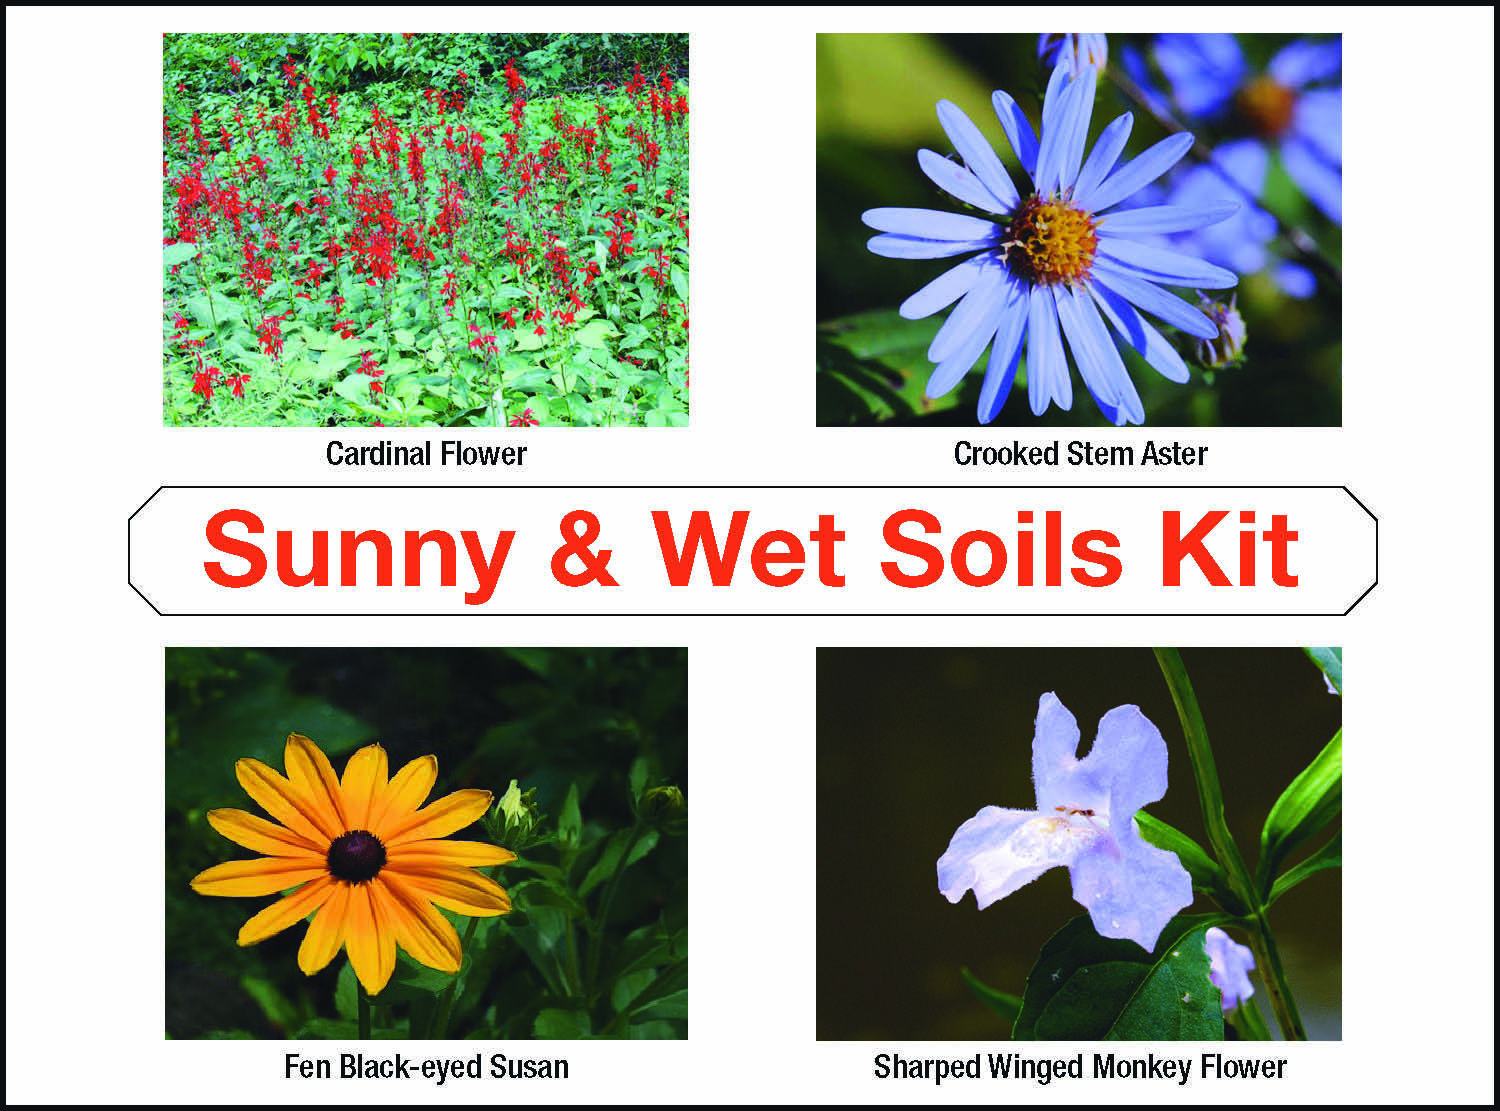 Sunny and Wet Soils Kit